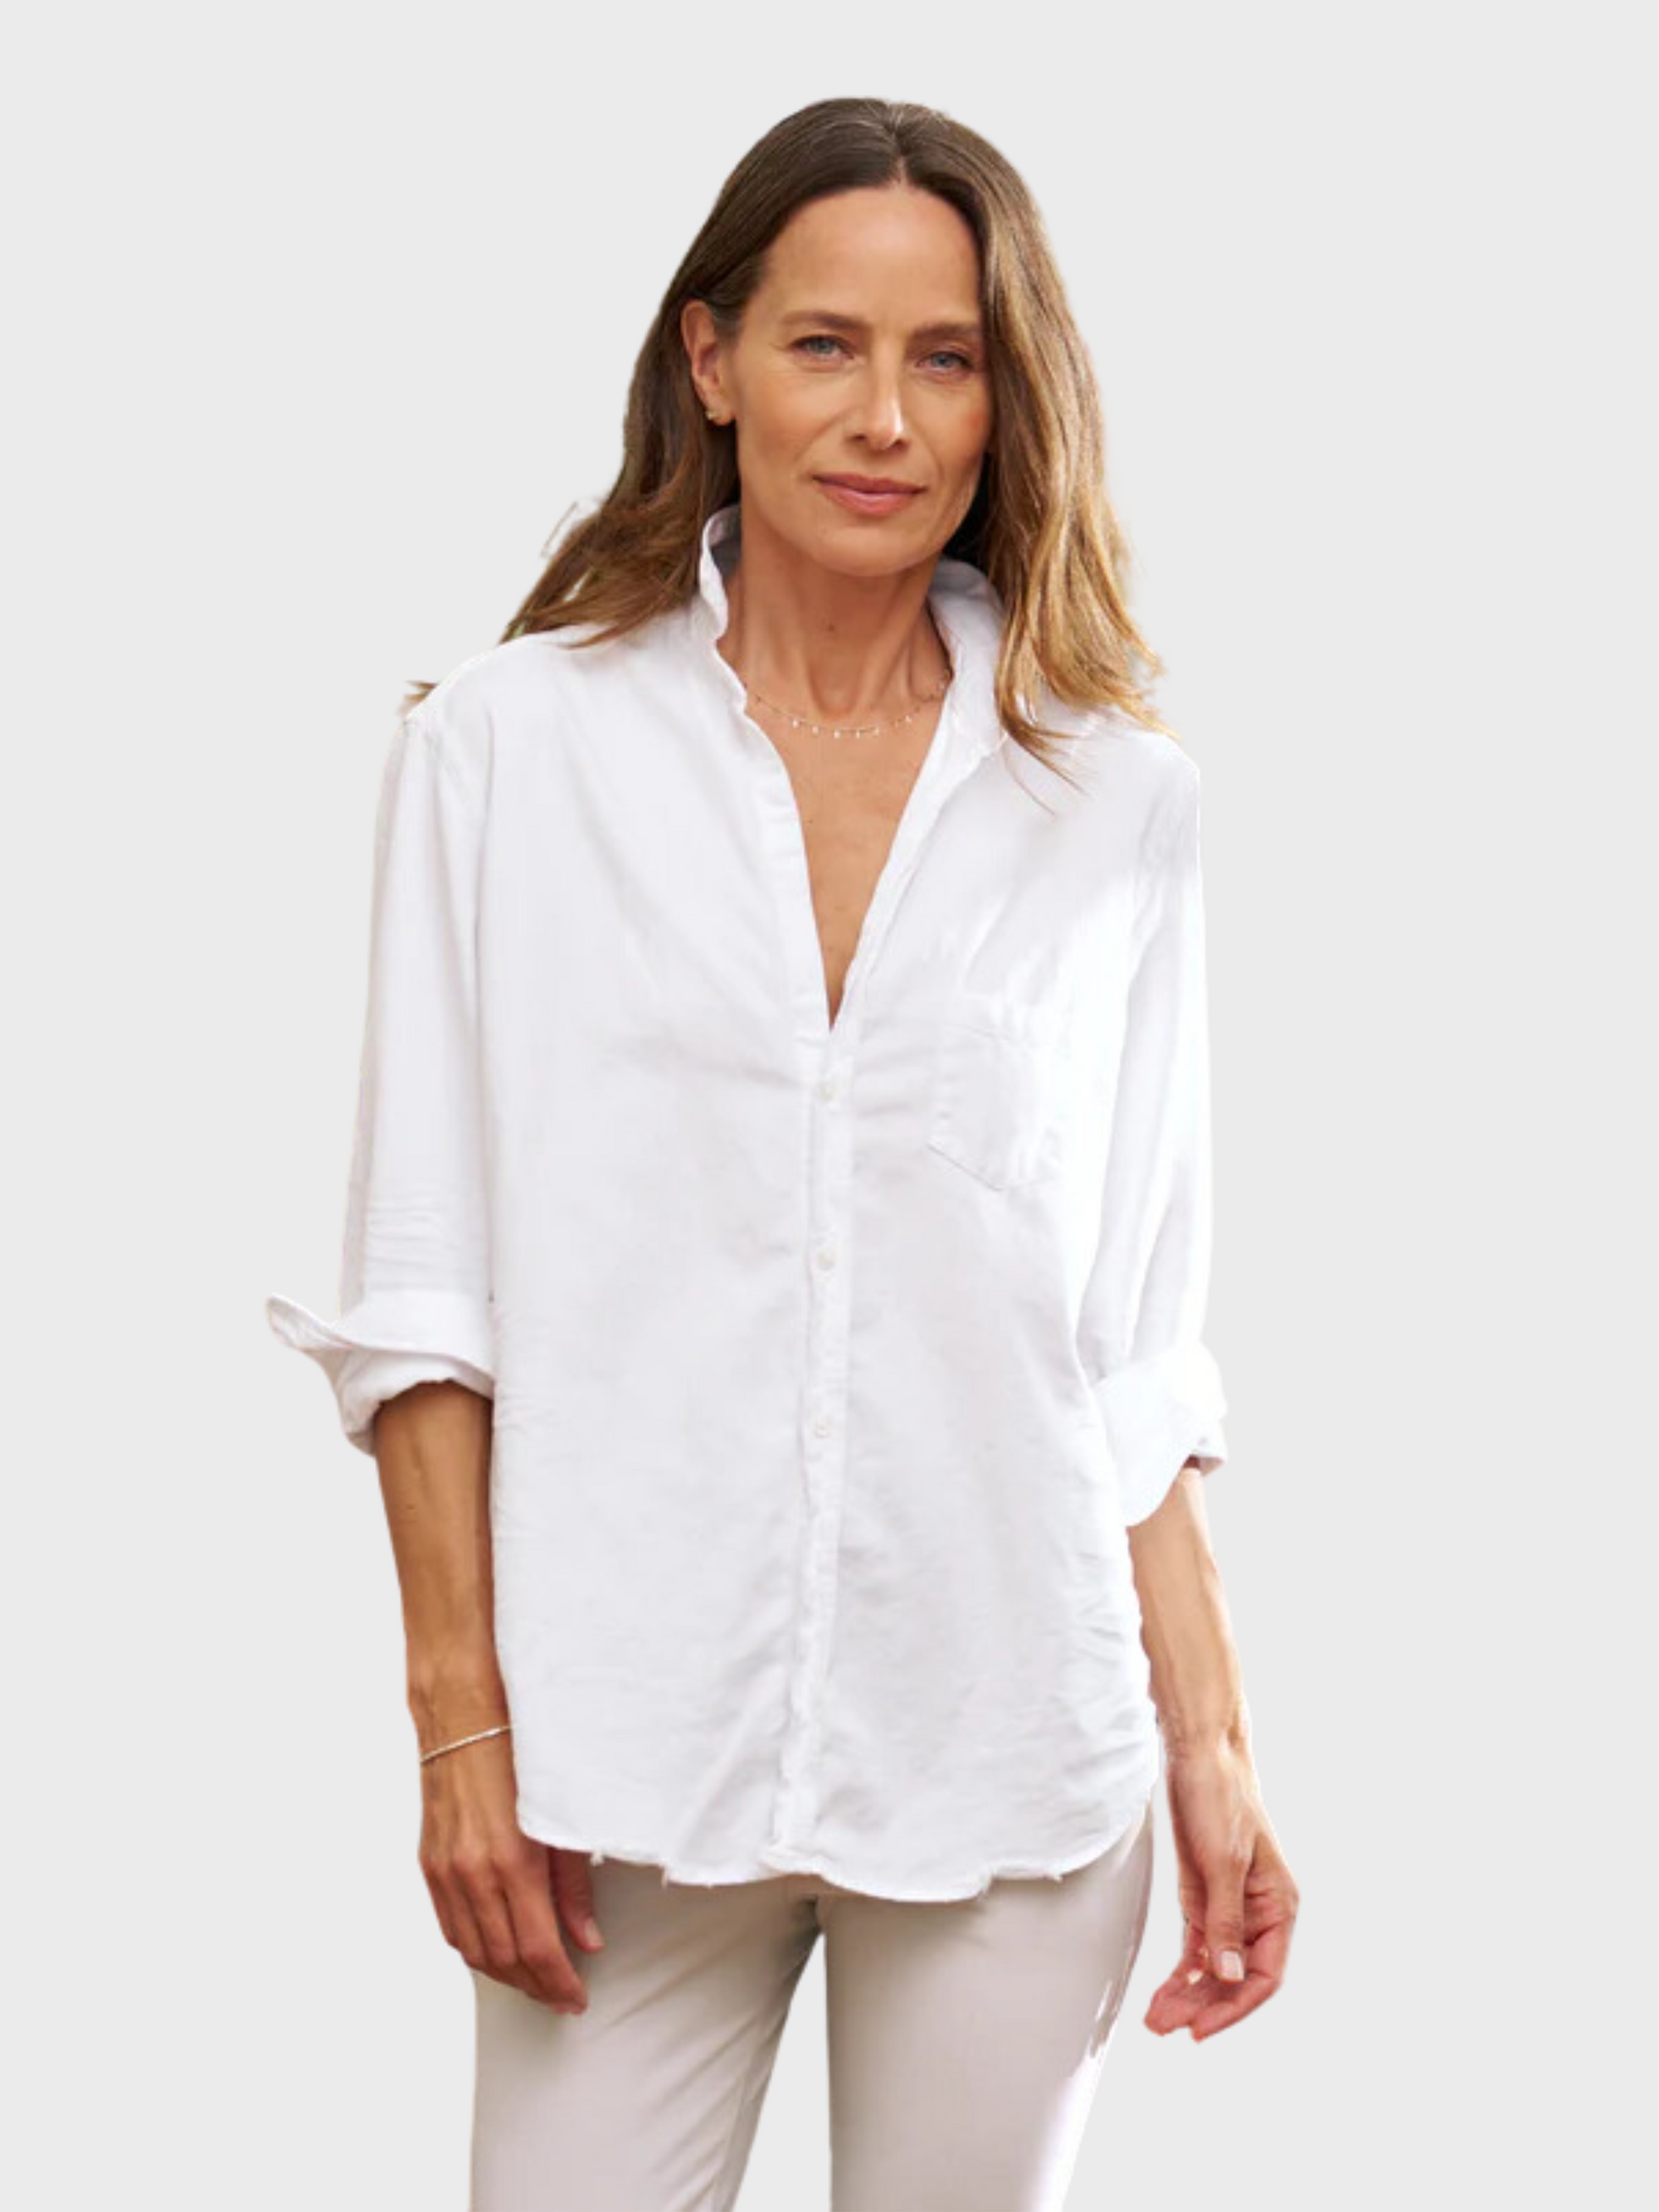 Frank &amp; Eileen Eileen Button Up Shirt- White Tattered Denim